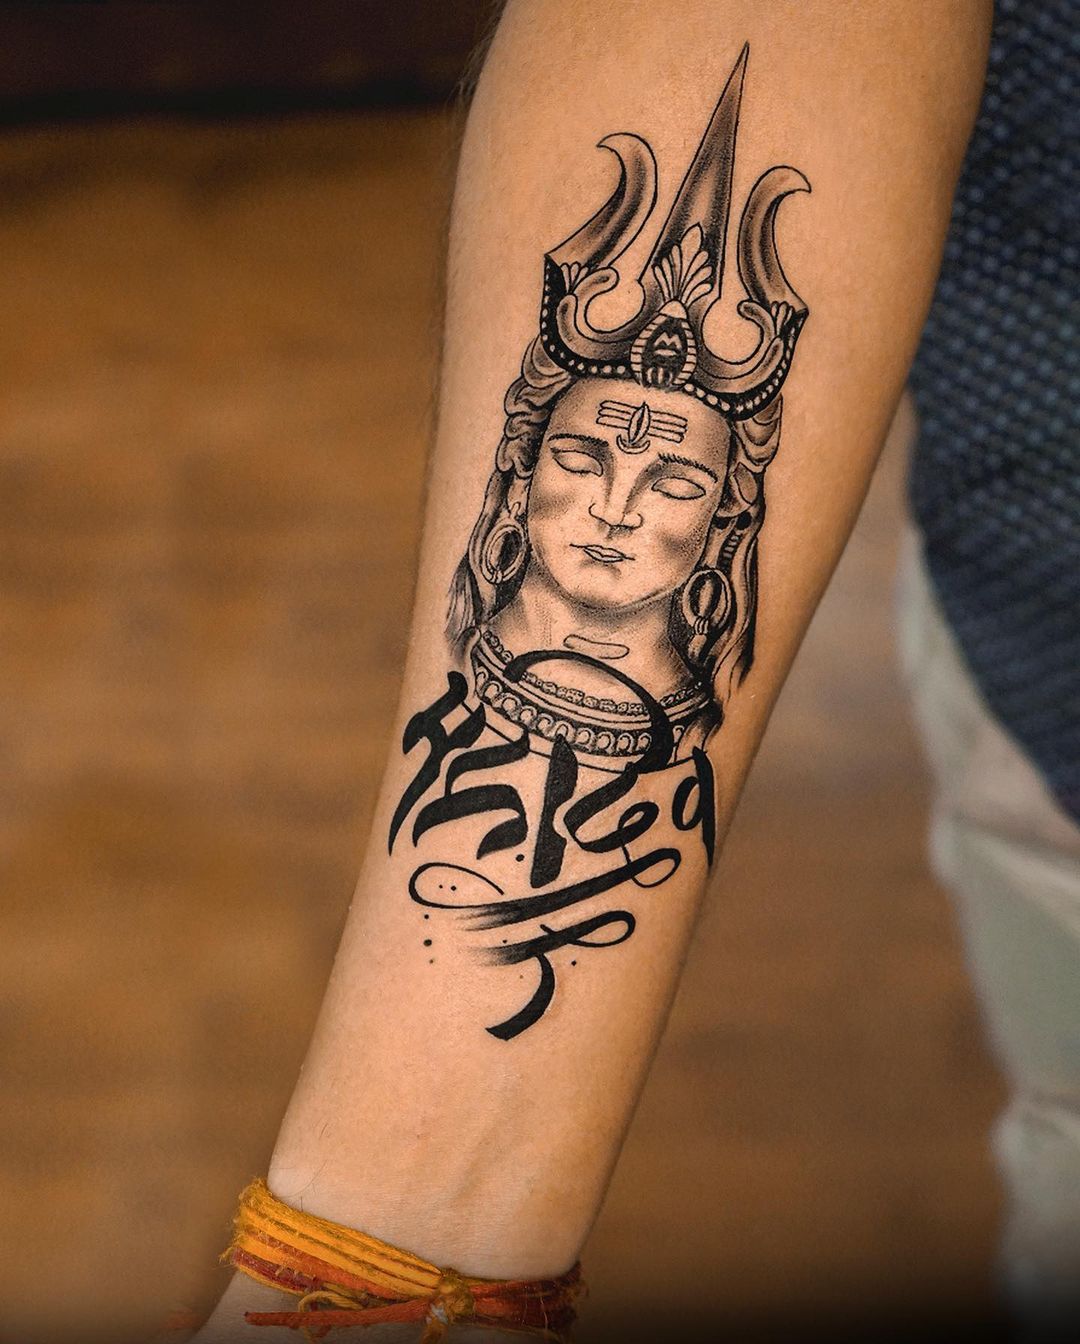 Mahadev tattoo |Mahadev tattoo design |Shiva tattoo |Shivji tattoo  |Bholenath tattoo | Om tattoo design, Shiva tattoo design, Trishul tattoo  designs